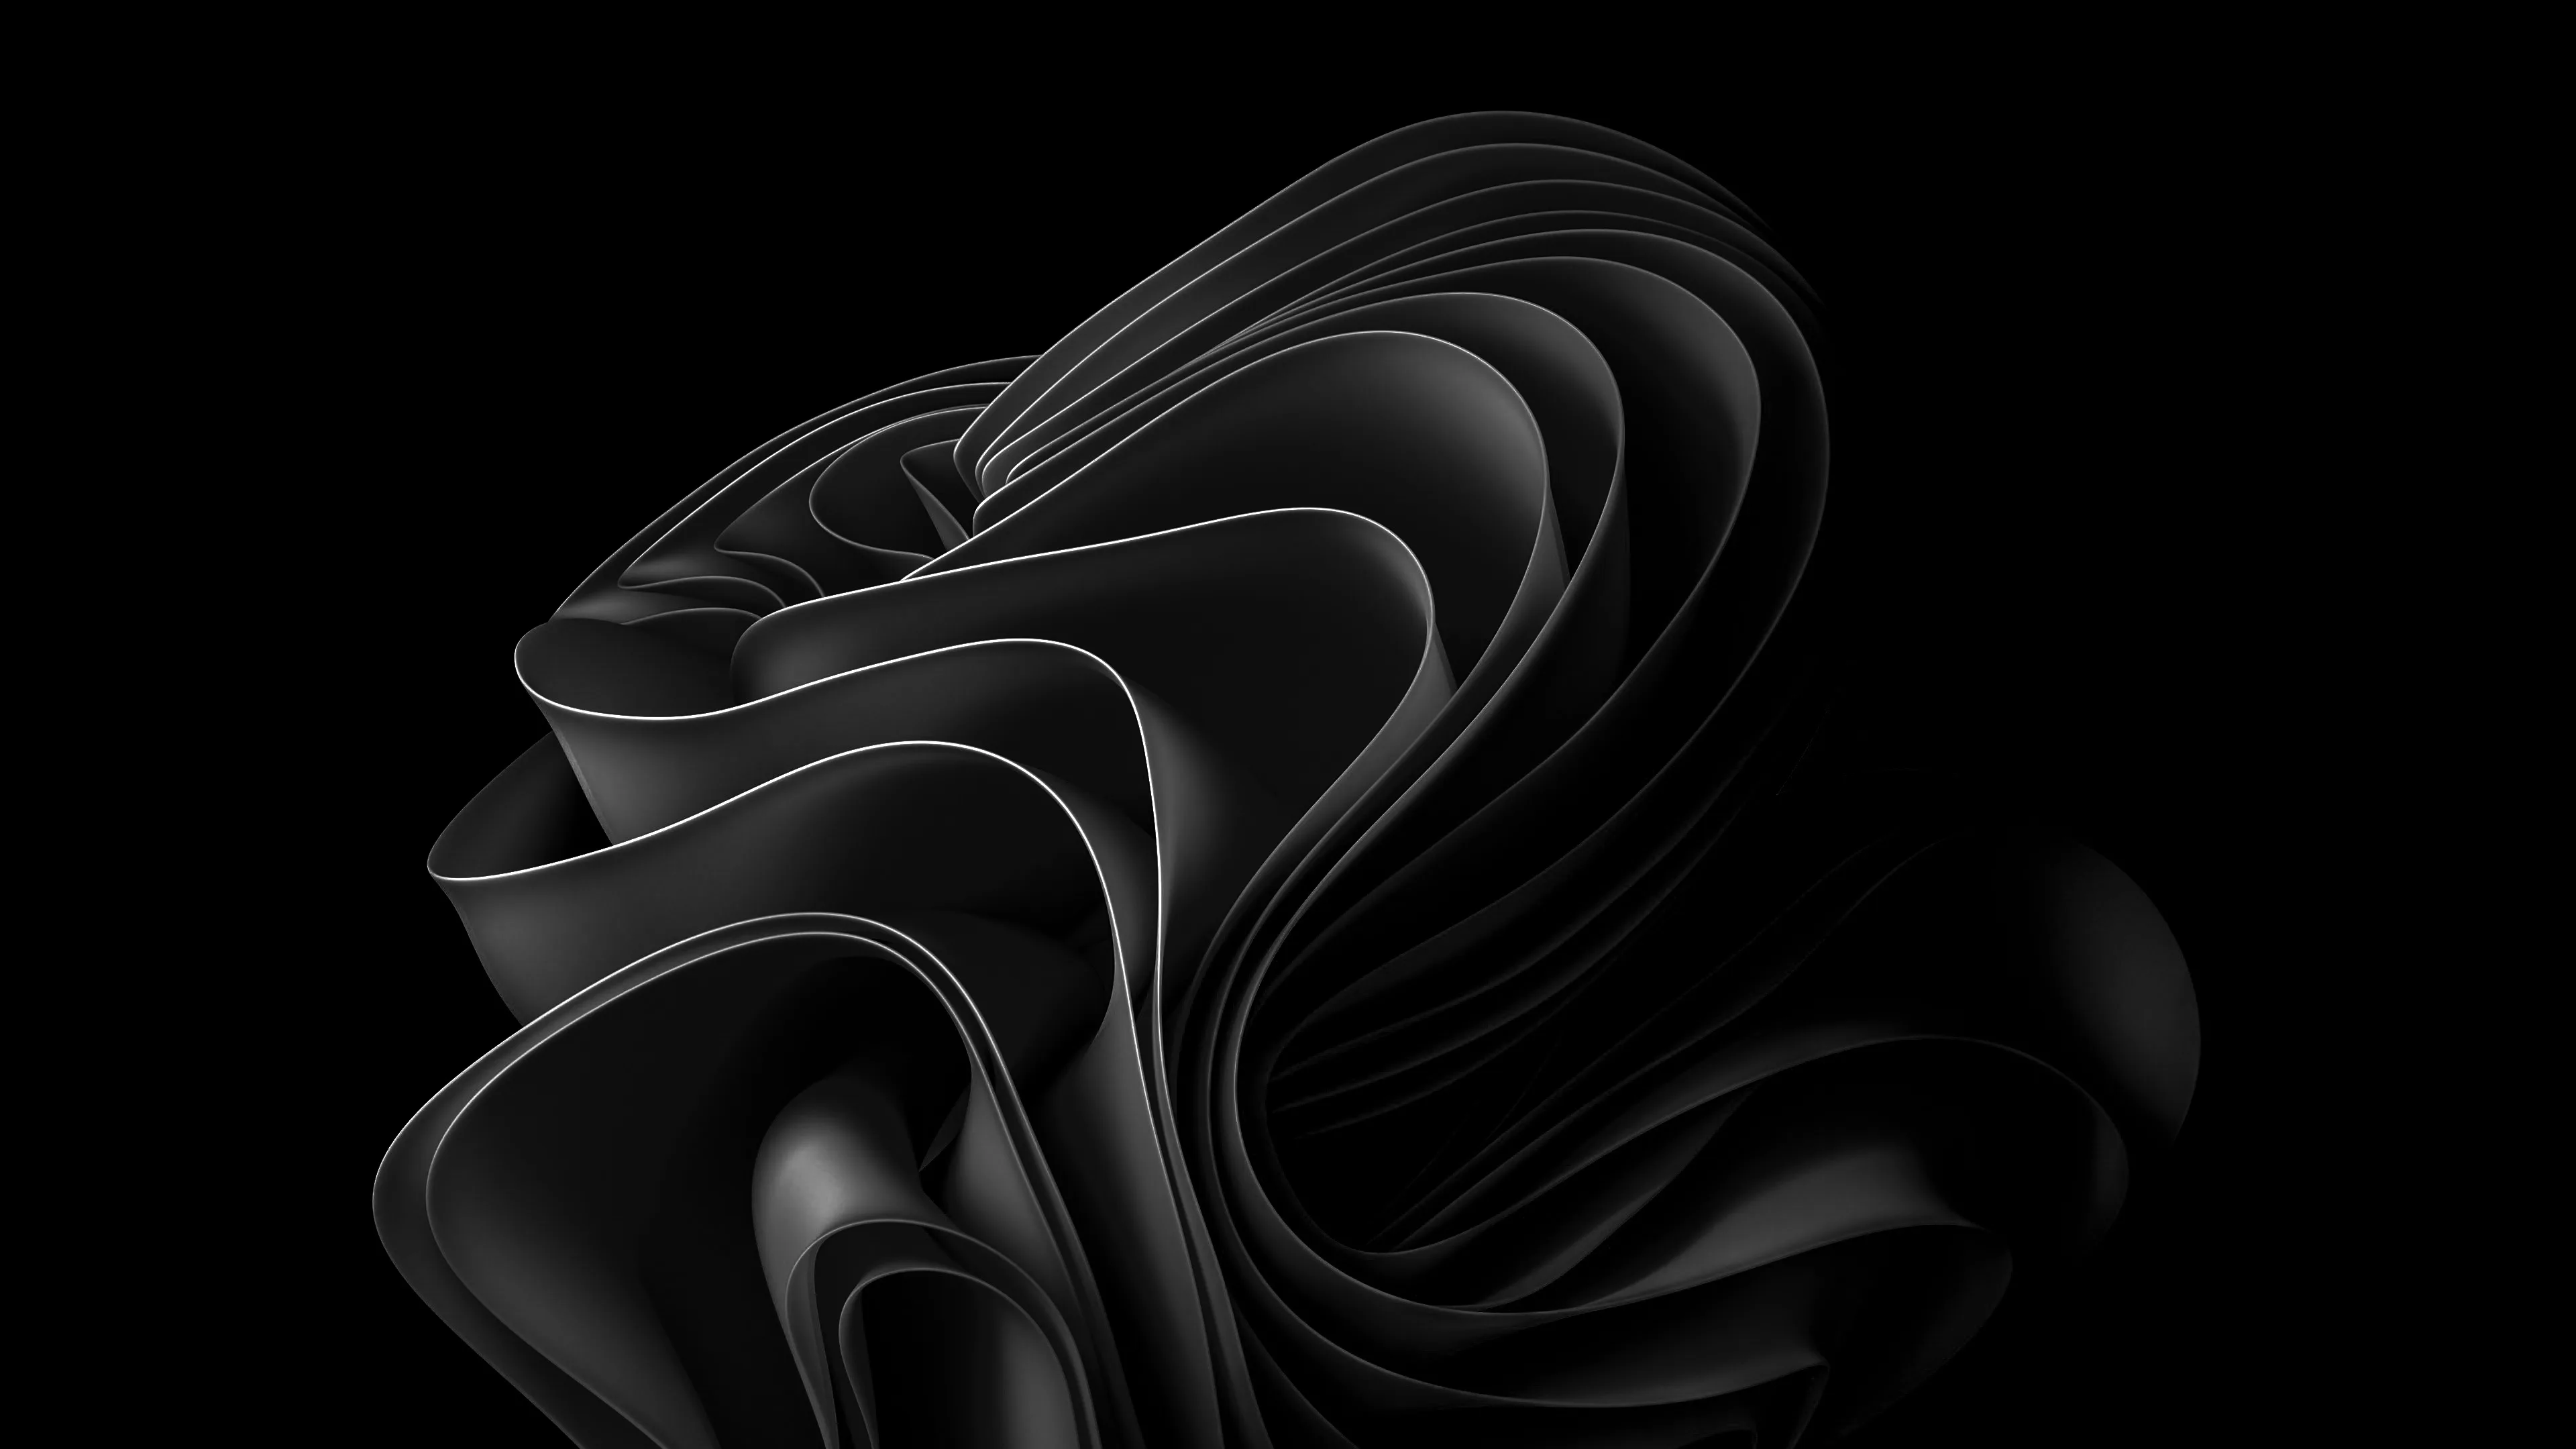 Free download 4K Black Wallpapers for Desktop iPad iPhone [1125x2436] for  your Desktop, Mobile & Tablet | Explore 18+ Black Wallpapers 4k | Black  Wallpaper 4K, 4K Black and White Wallpaper, Black